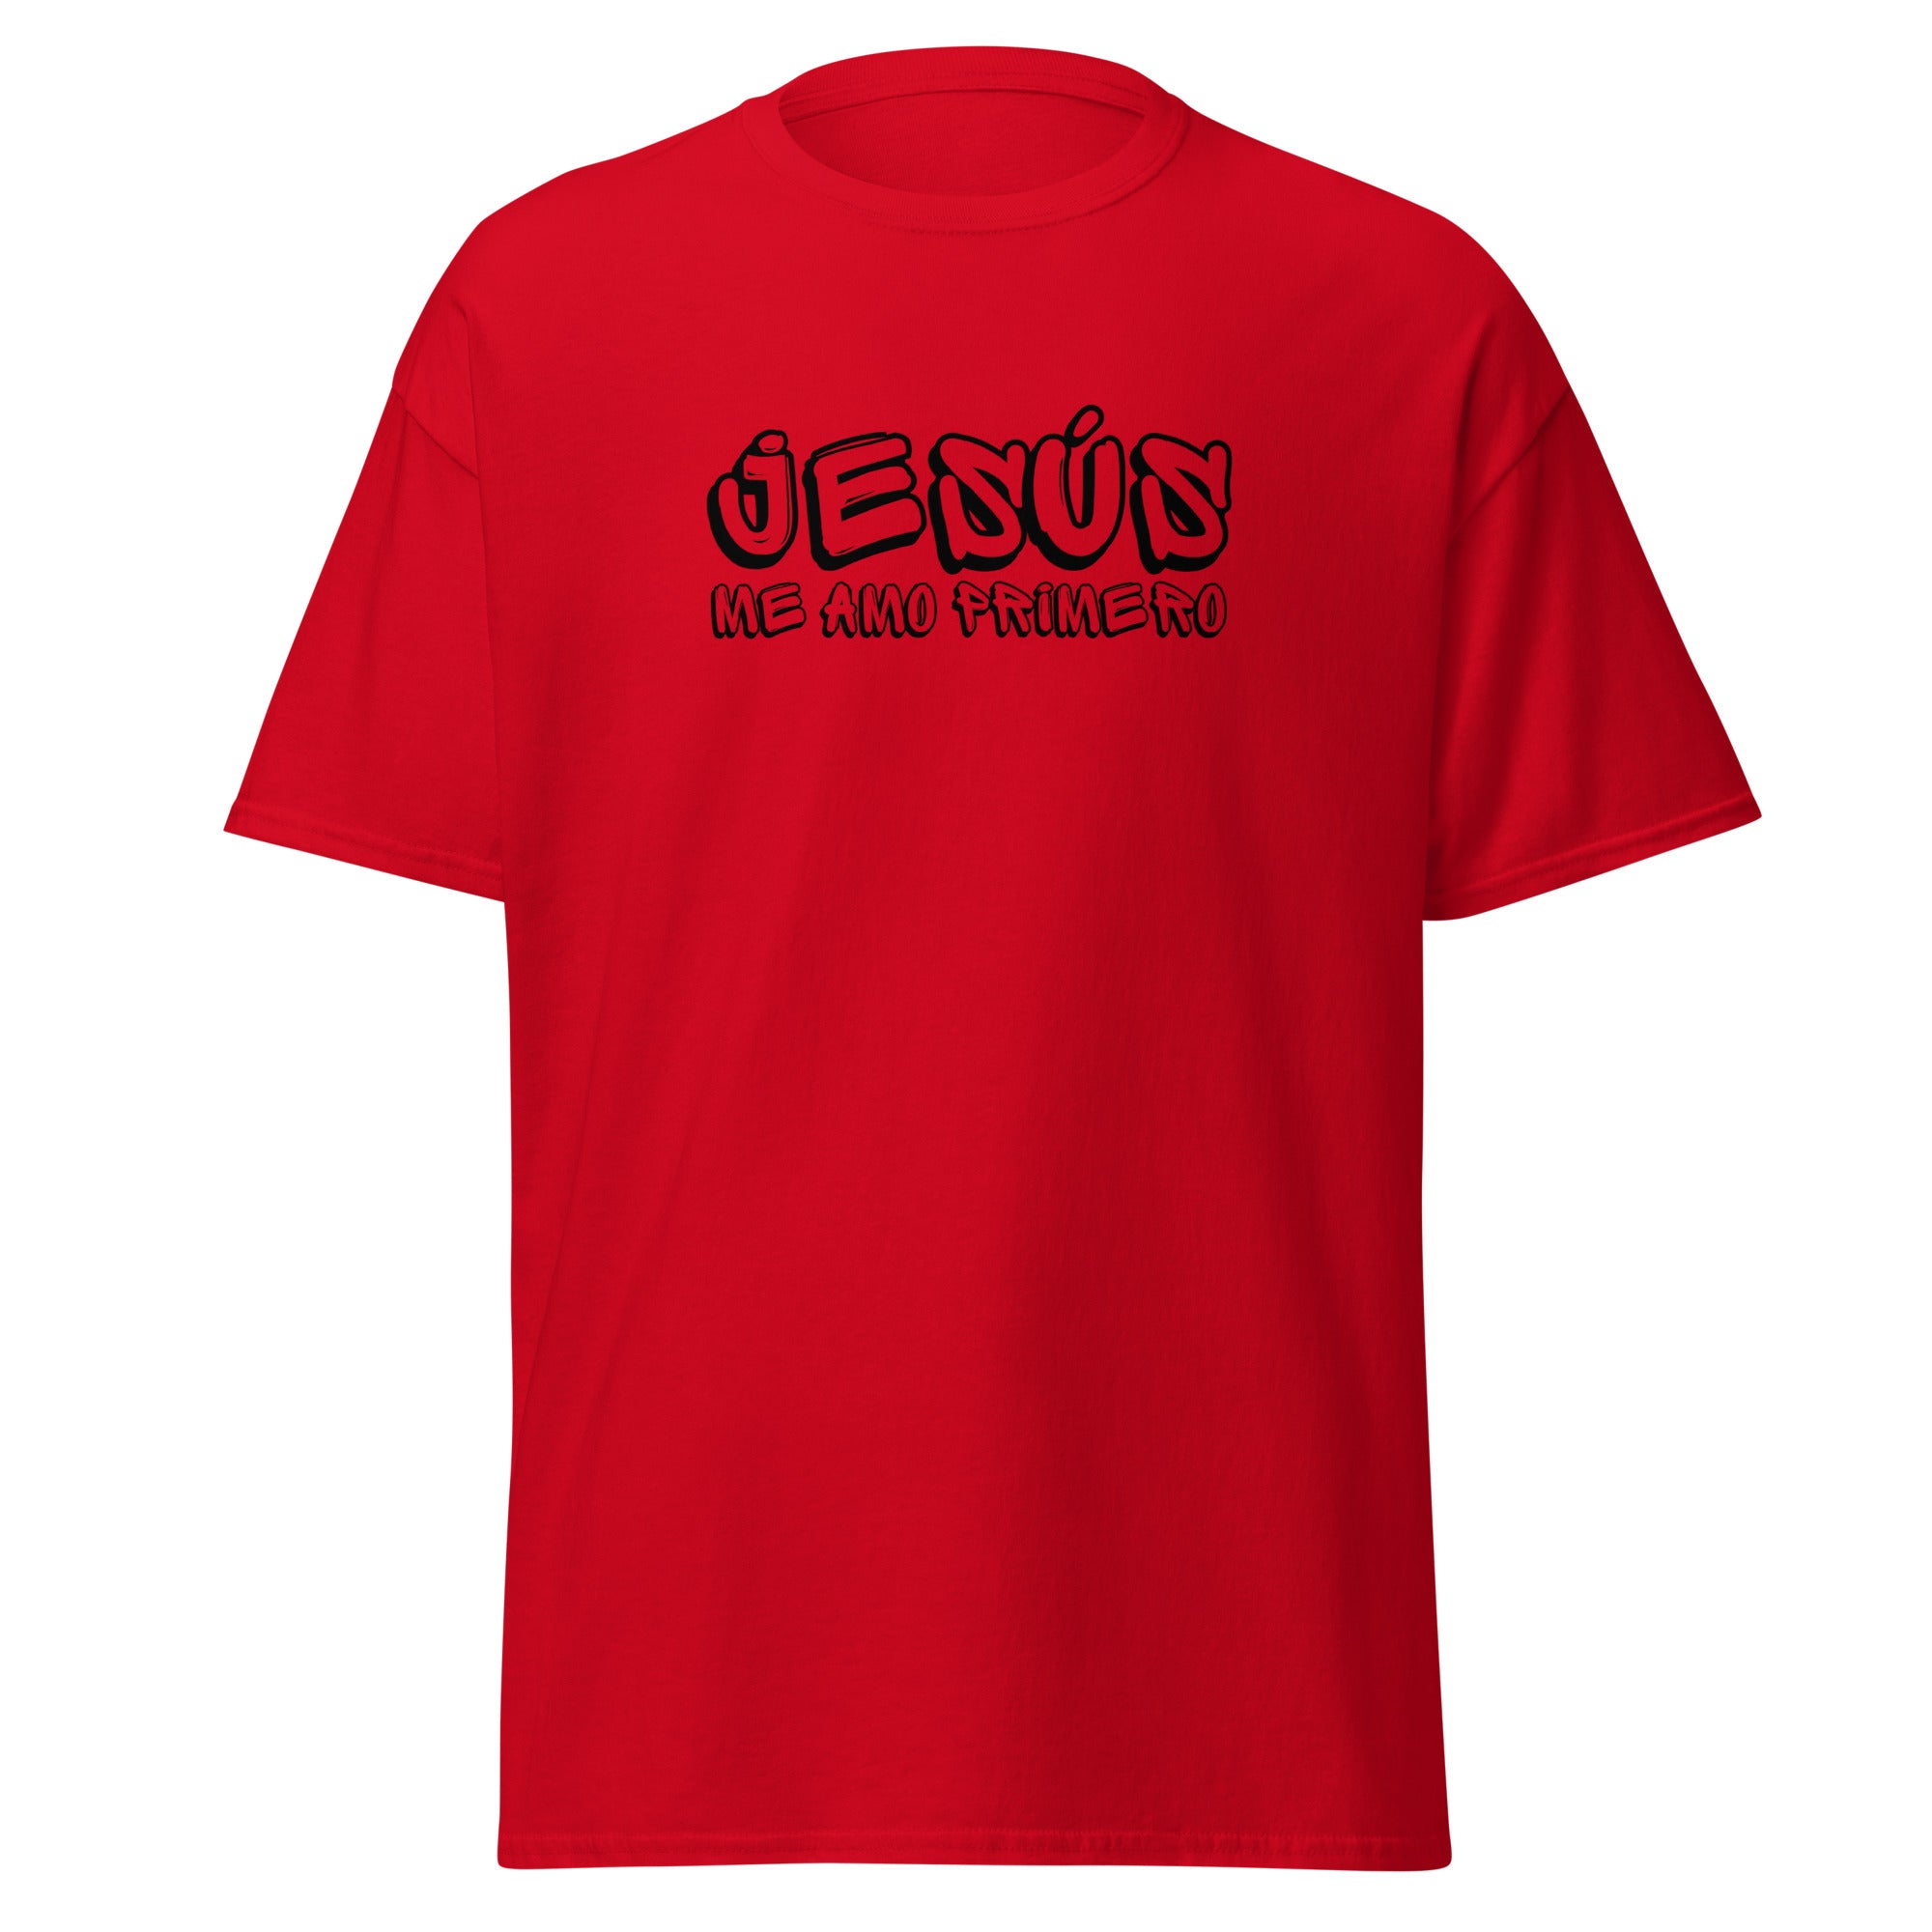 Jesus loved me first, 100% Cotton Christian Shirt / Jesús me amo primero, Camisa Cristiana 100% Algodon